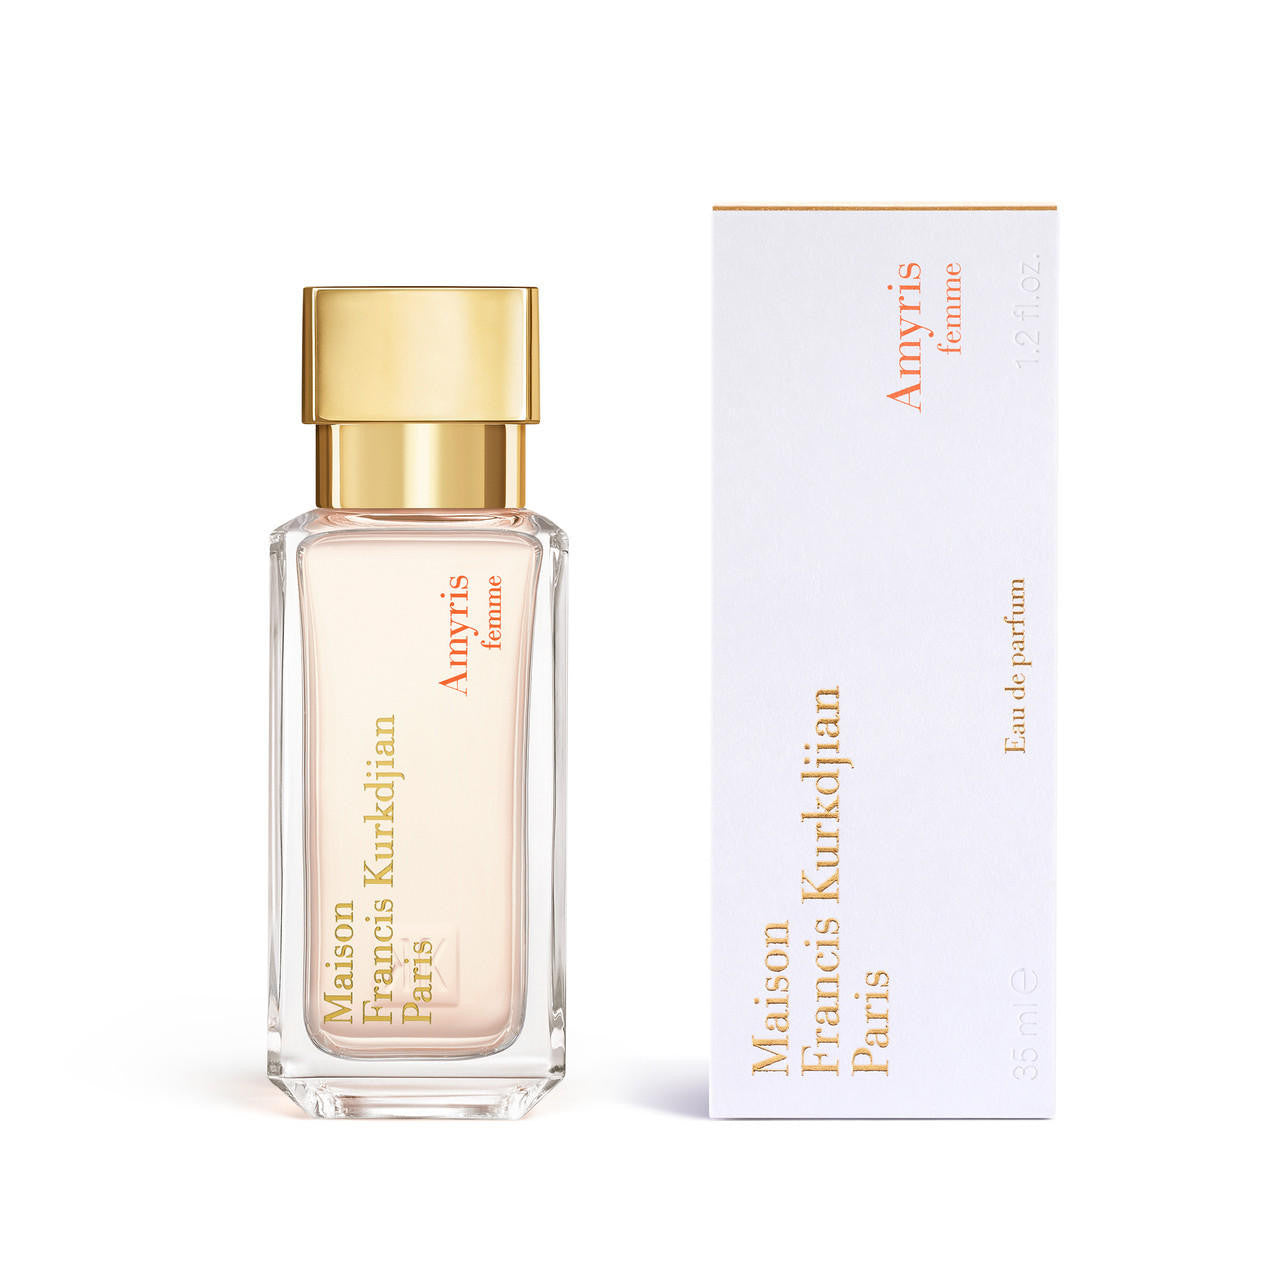  Maison Francis Kurkdjian Amyris Femme Eau de Parfum 35ml 